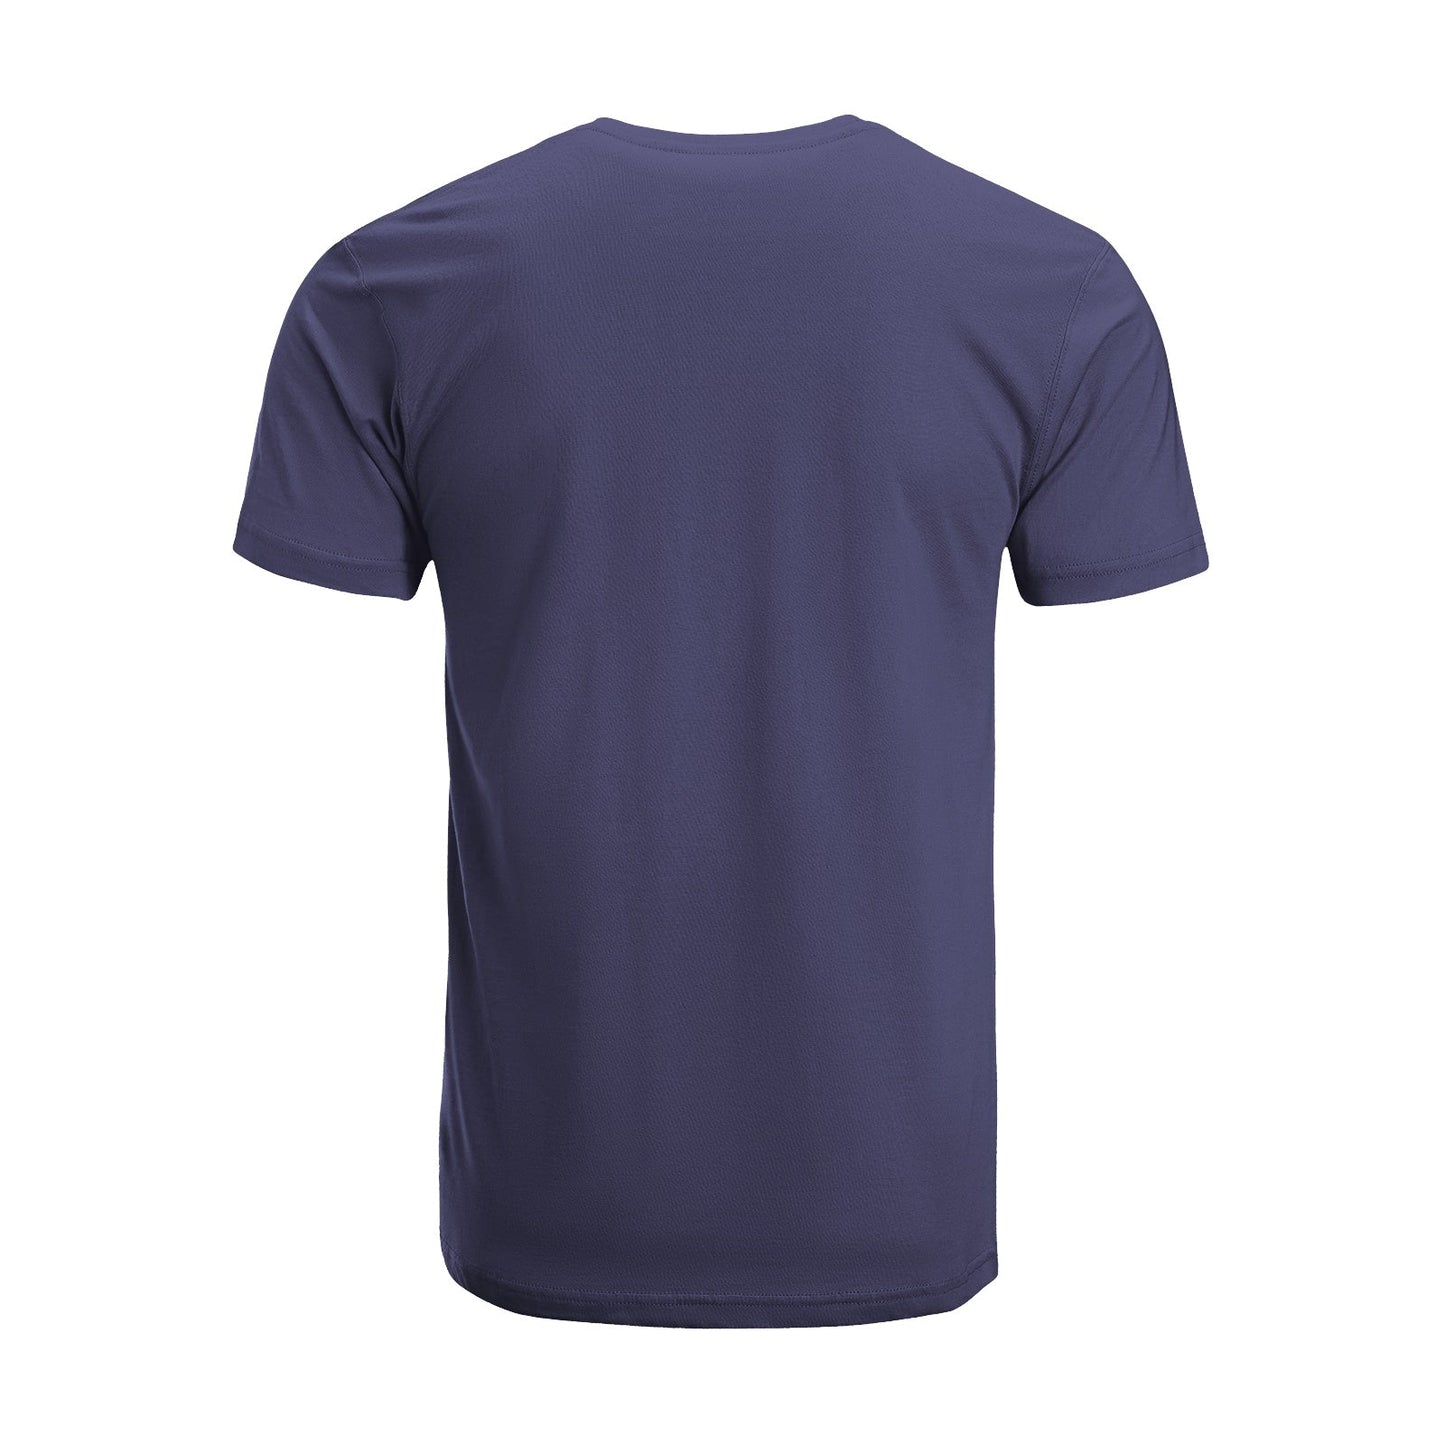 Unisex Short Sleeve Crew Neck Cotton Jersey T-Shirt CAT 15 - Tara-Outfits.com